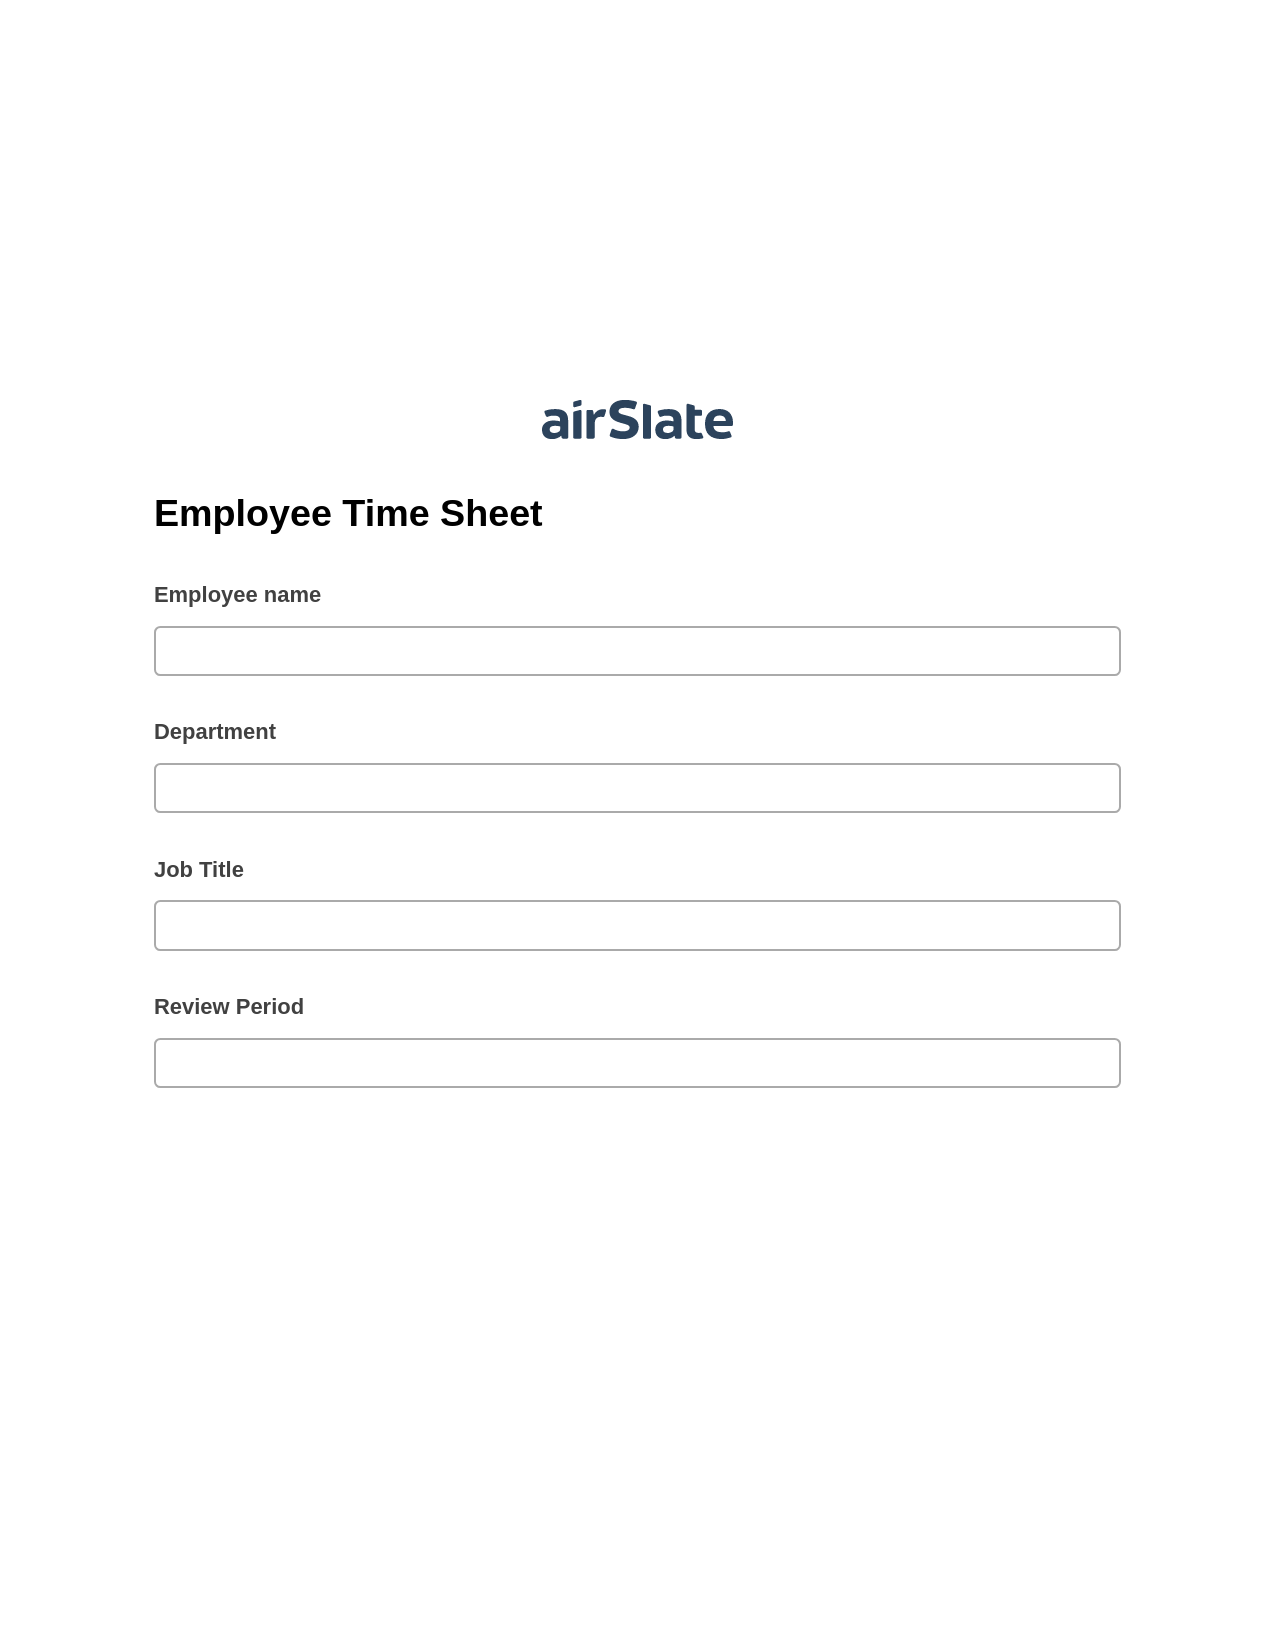 Multirole Employee Time Sheet Pre-fill from Salesforce Records Bot, Google Calendar Bot, Slack Two-Way Binding Bot